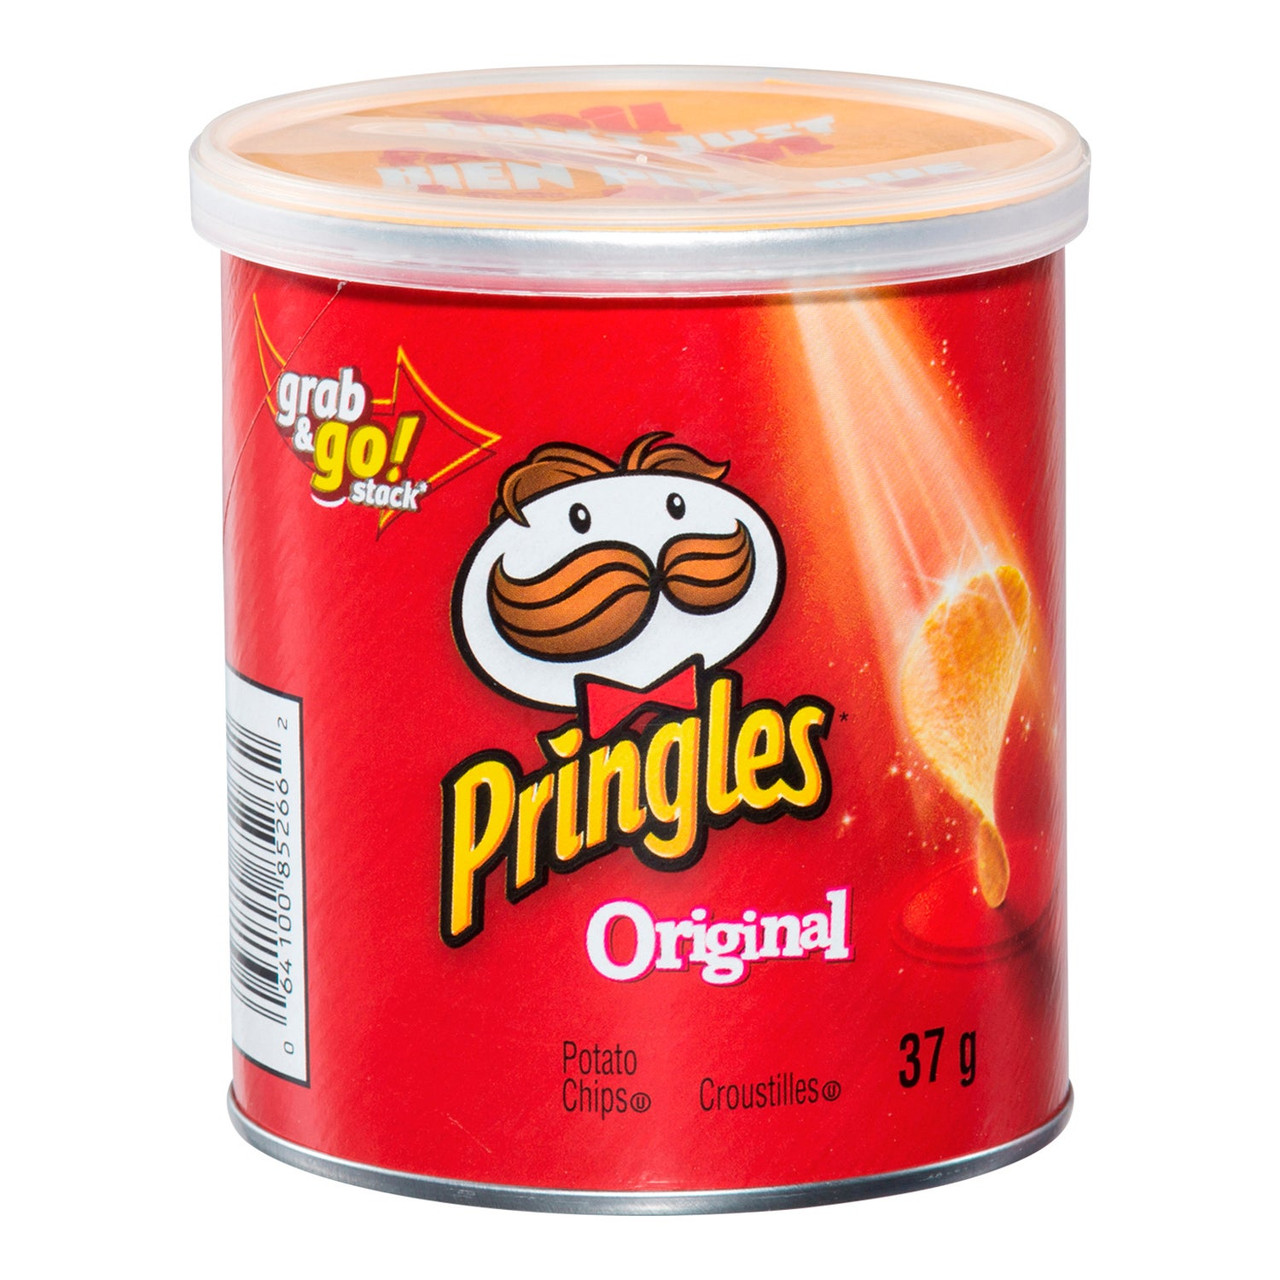 Pringles Regular Potato Chips, Small Can | 37G/Unit, 12 Units/Case